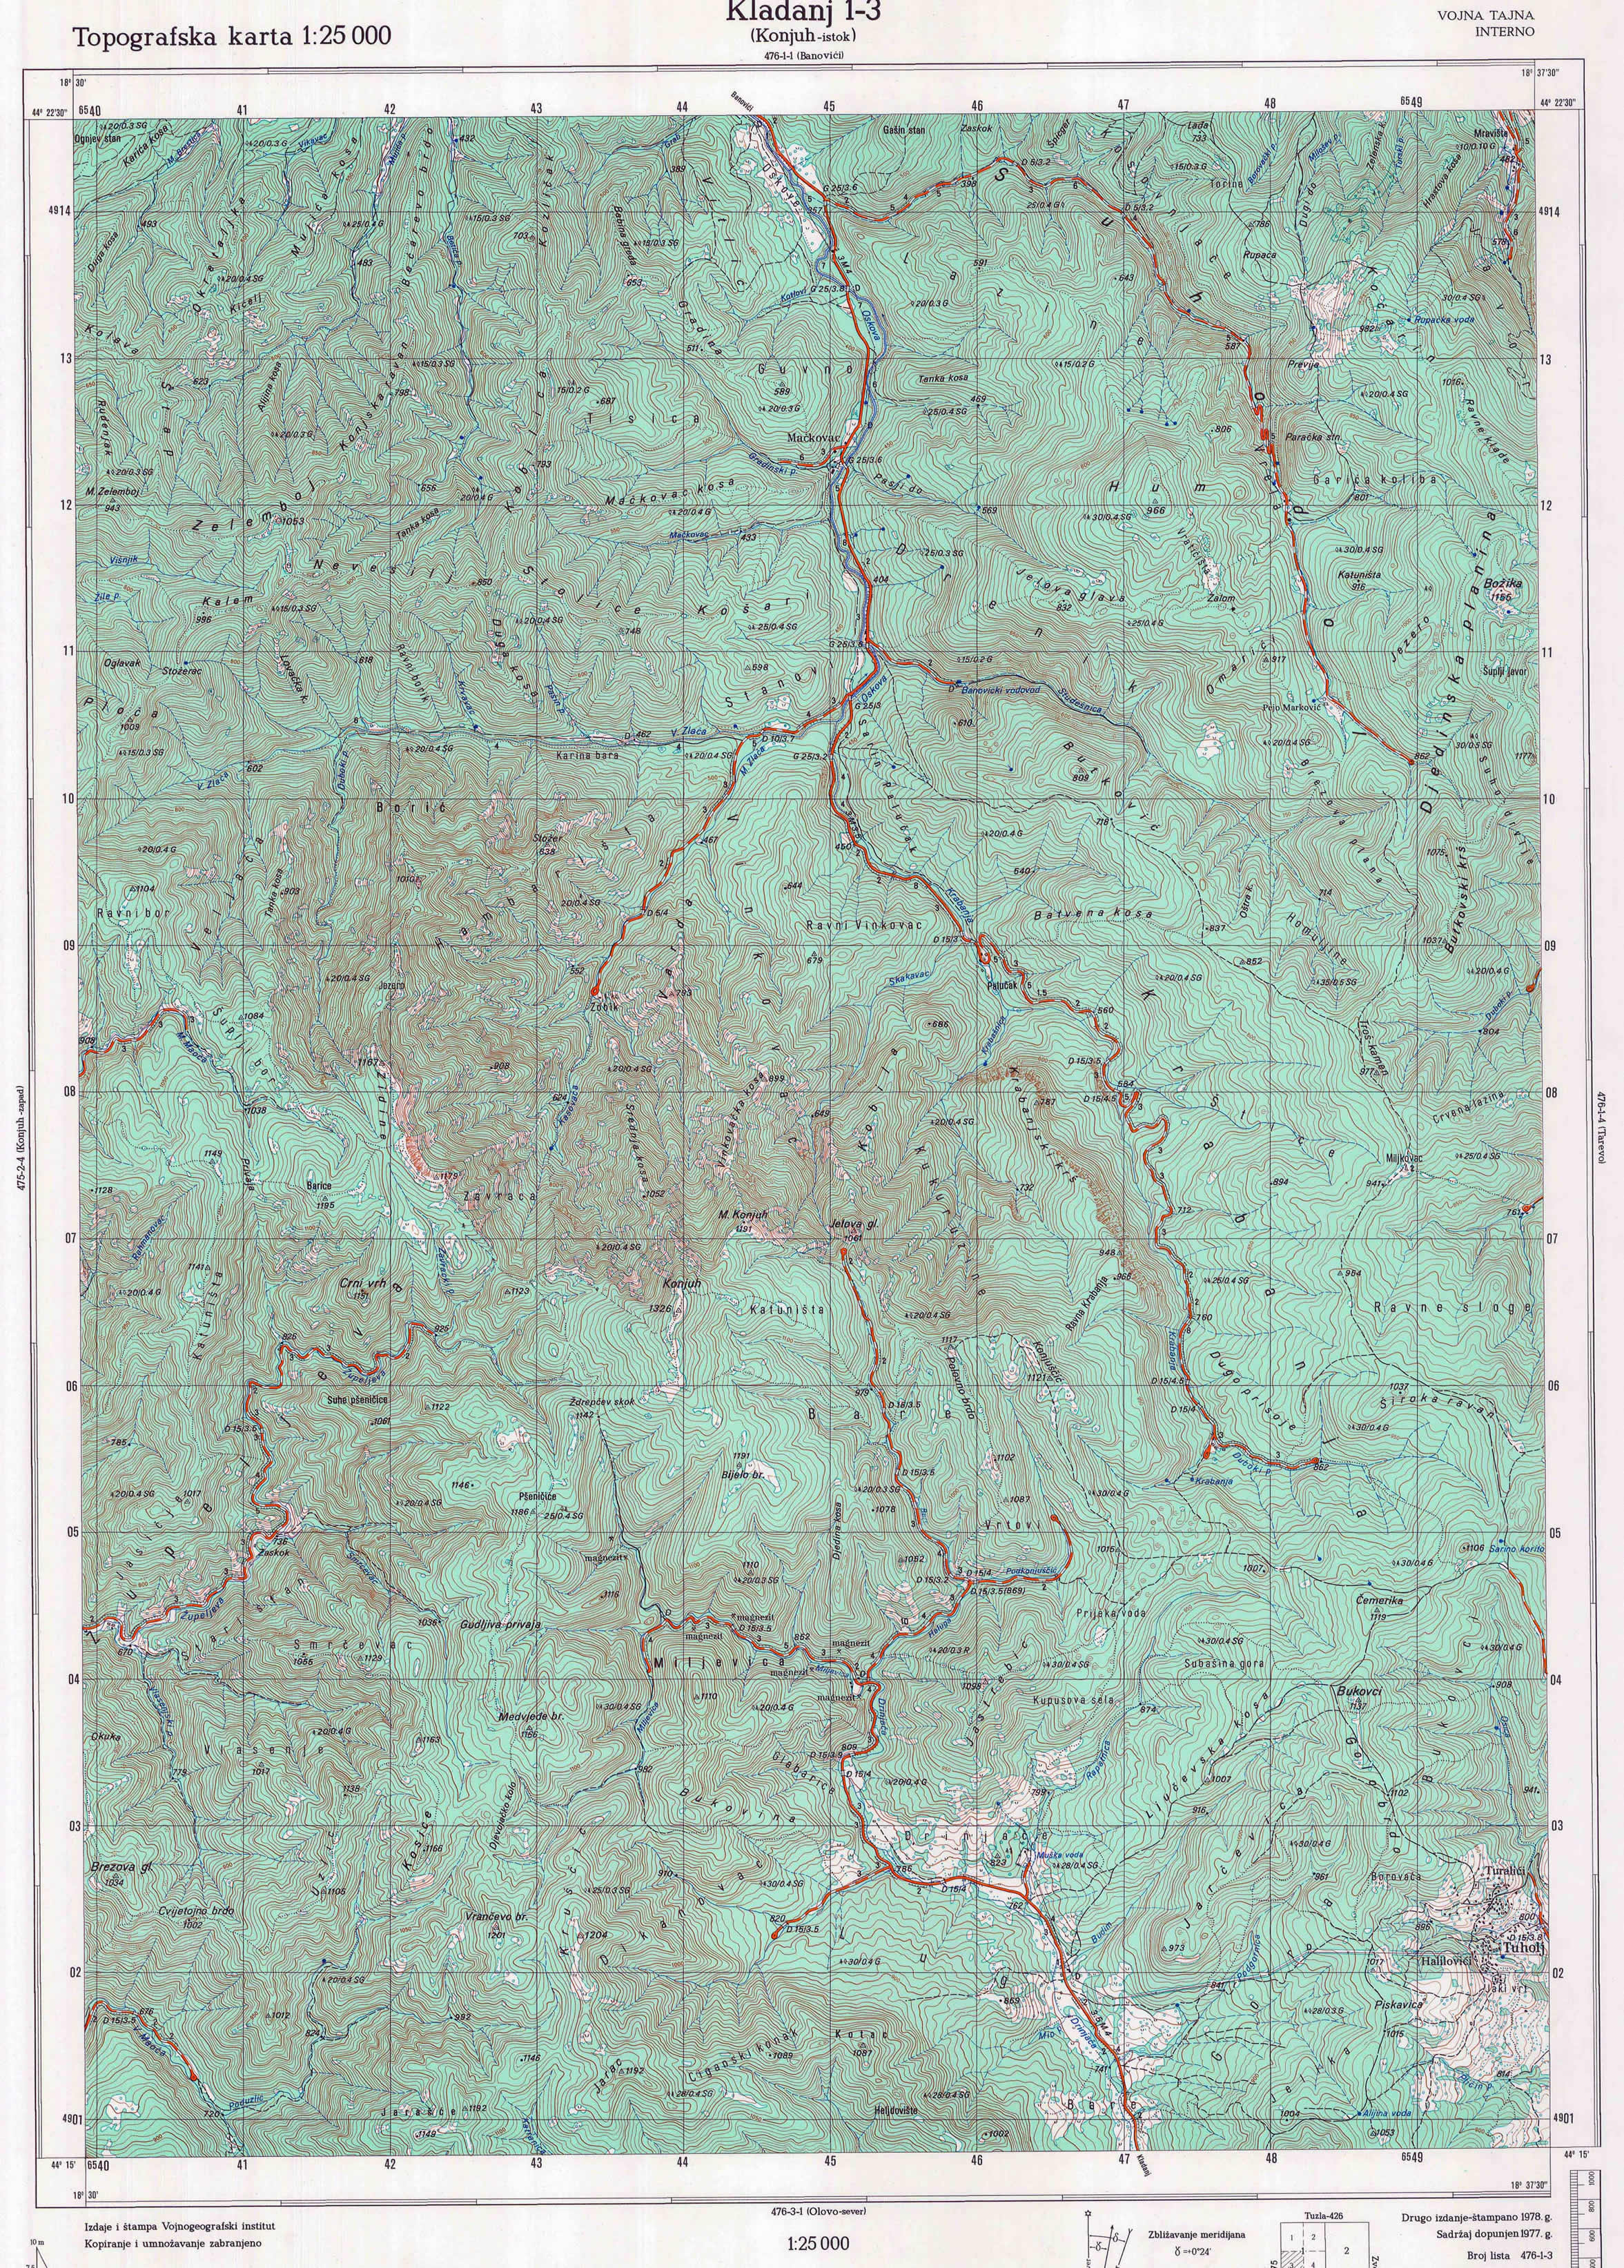  topografska karta Bosne i Hercegovine 25000 JNA  kladanj